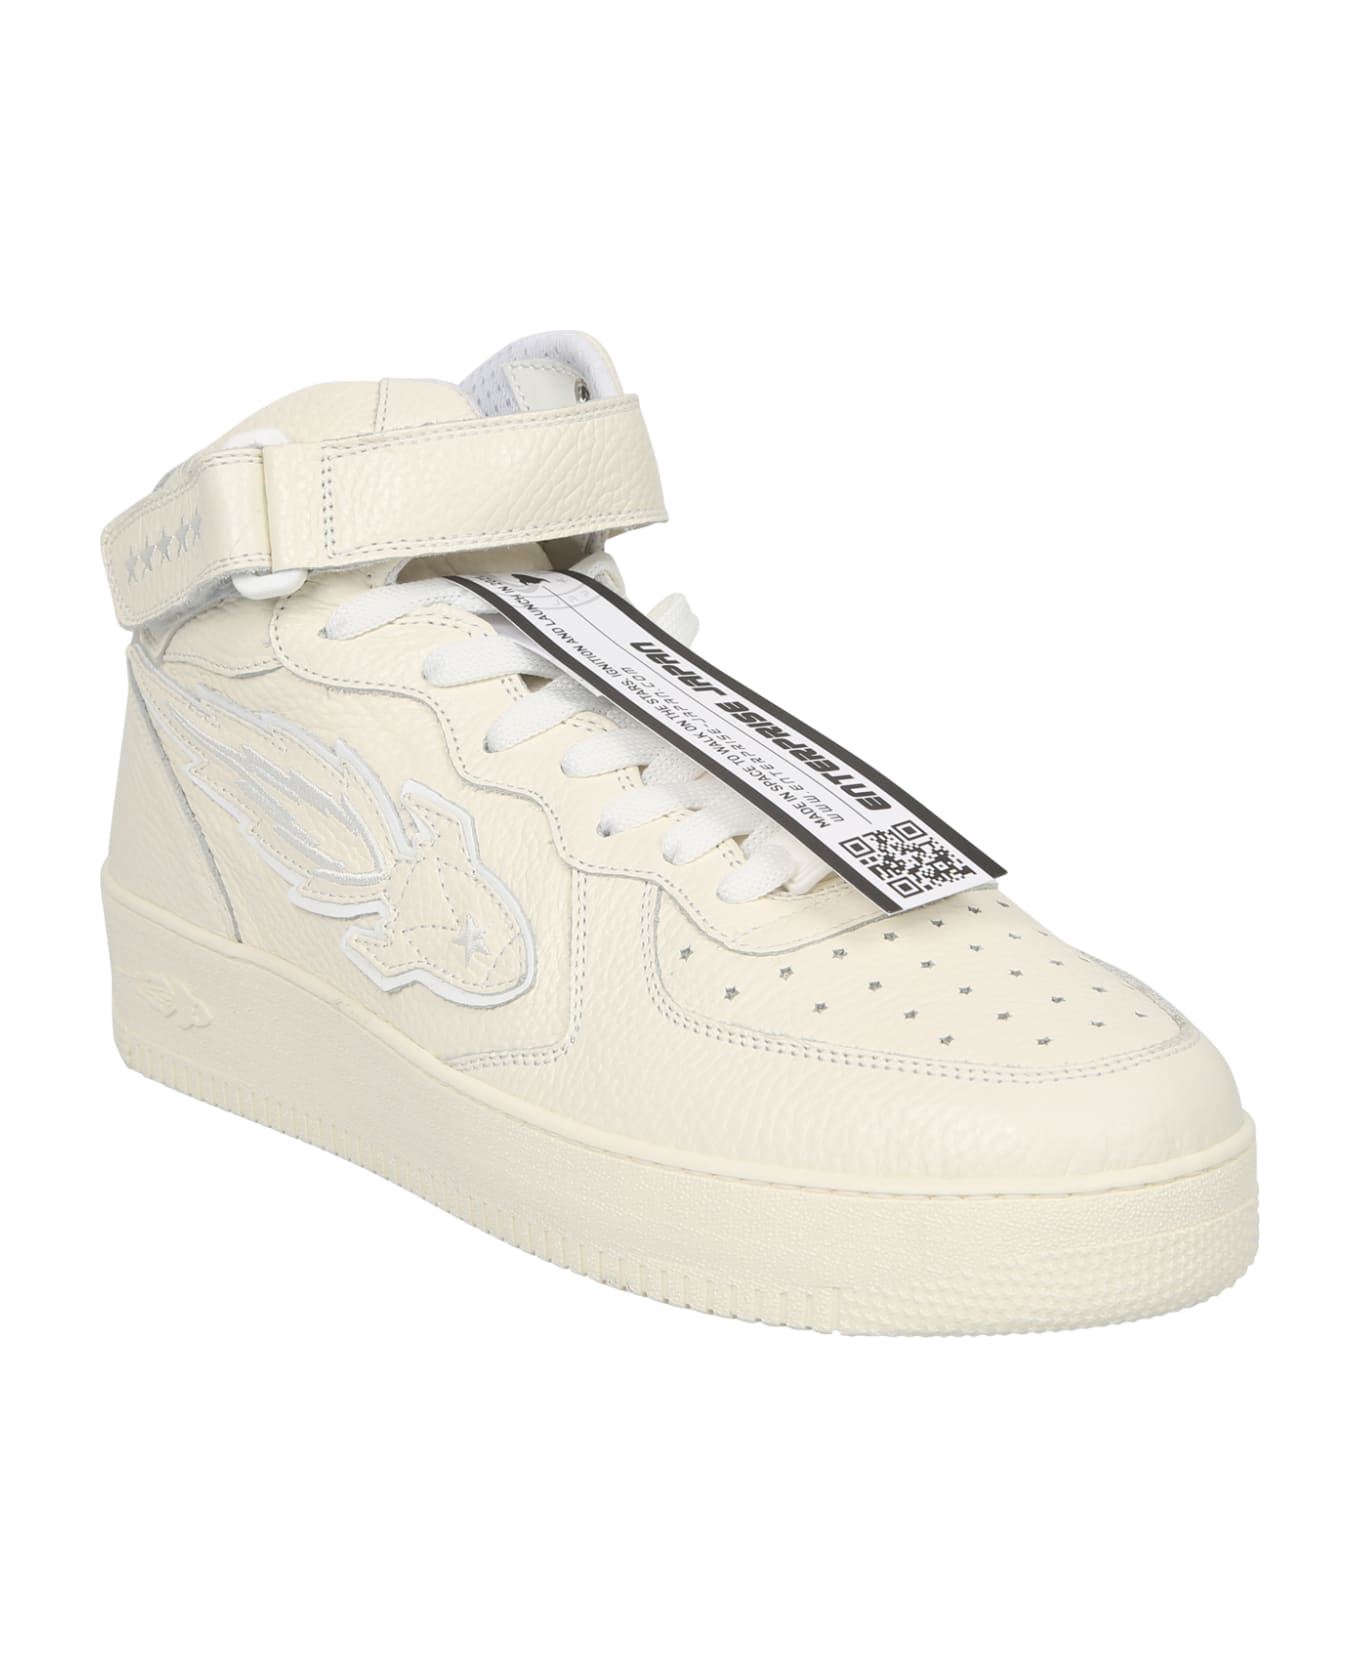 Enterprise Japan Leather Sneakers - White